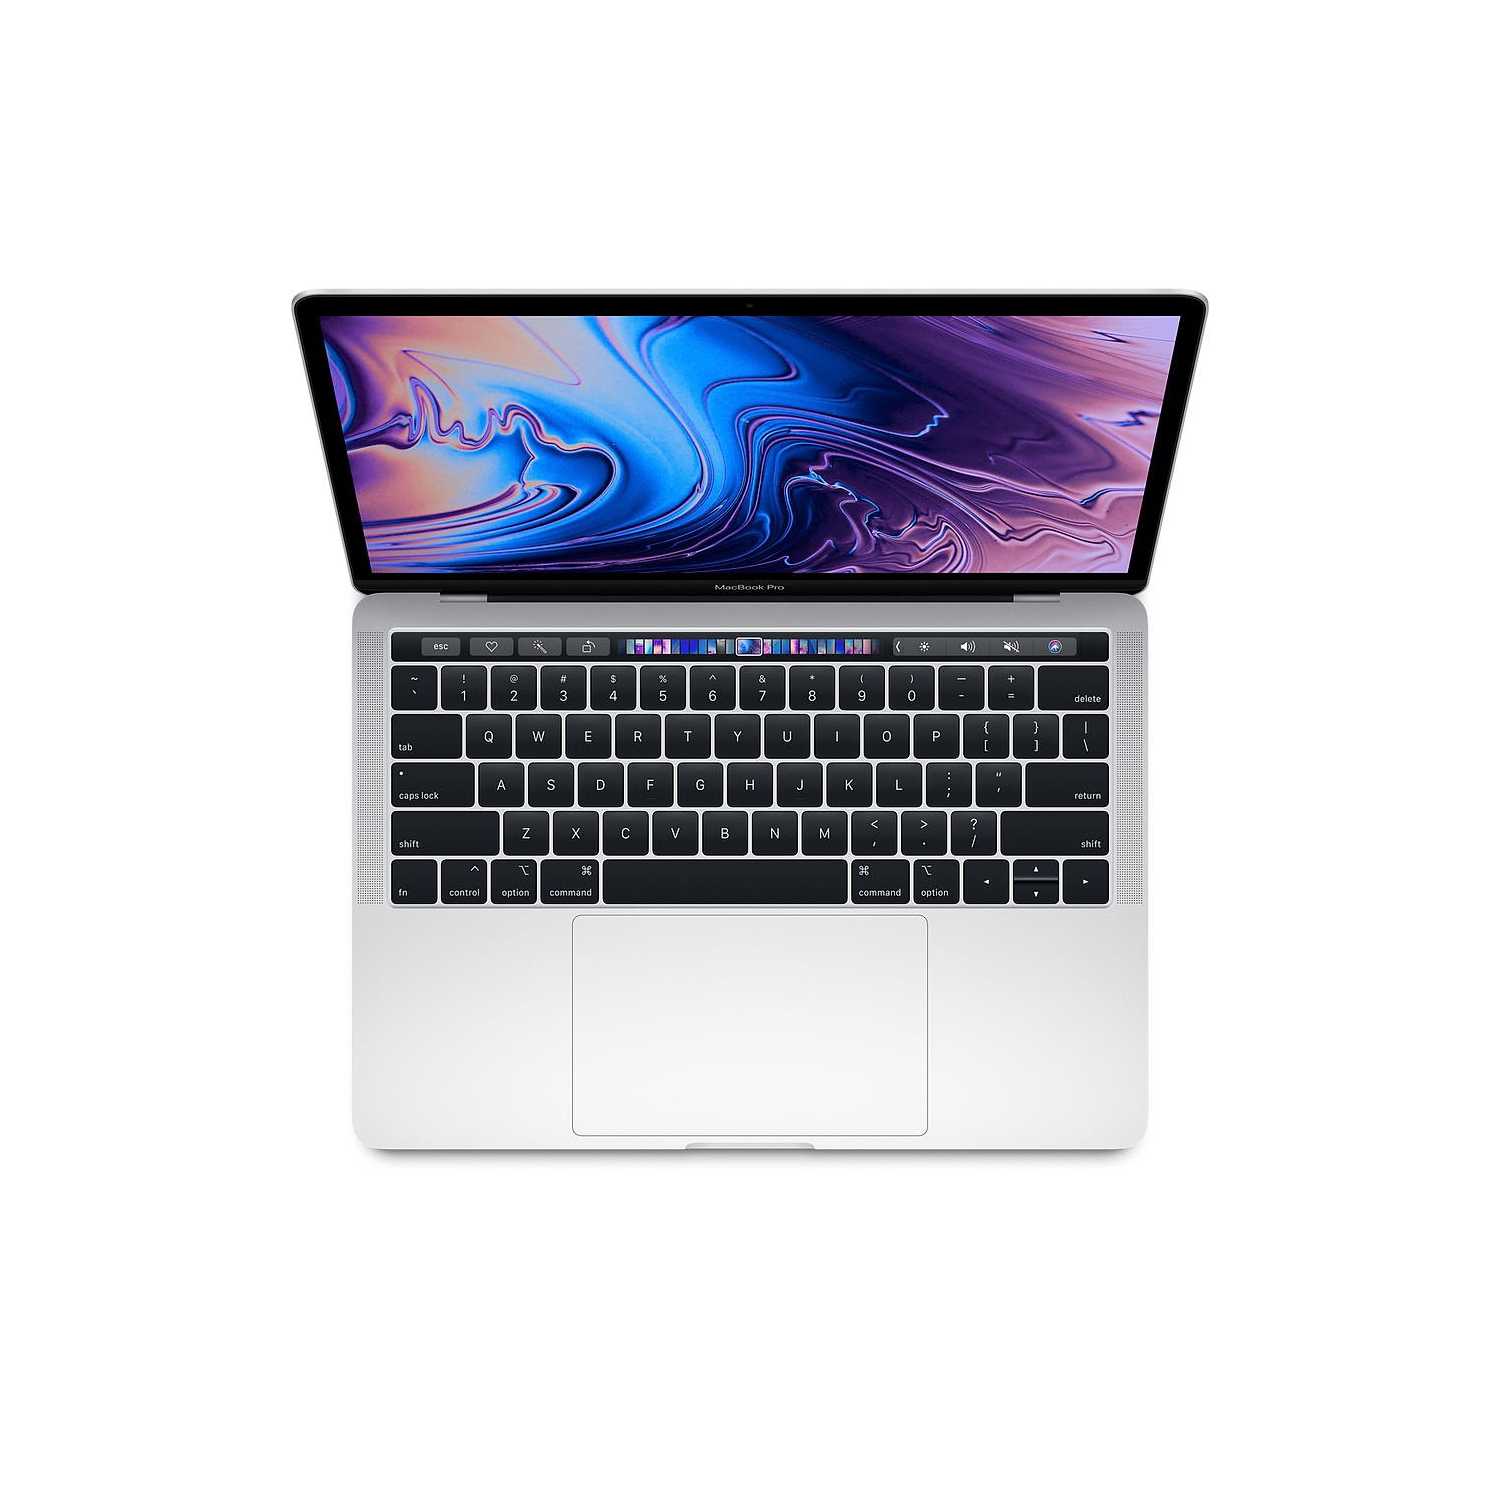 Refurbished - Good) Macbook Pro 13.3-inch (Silver